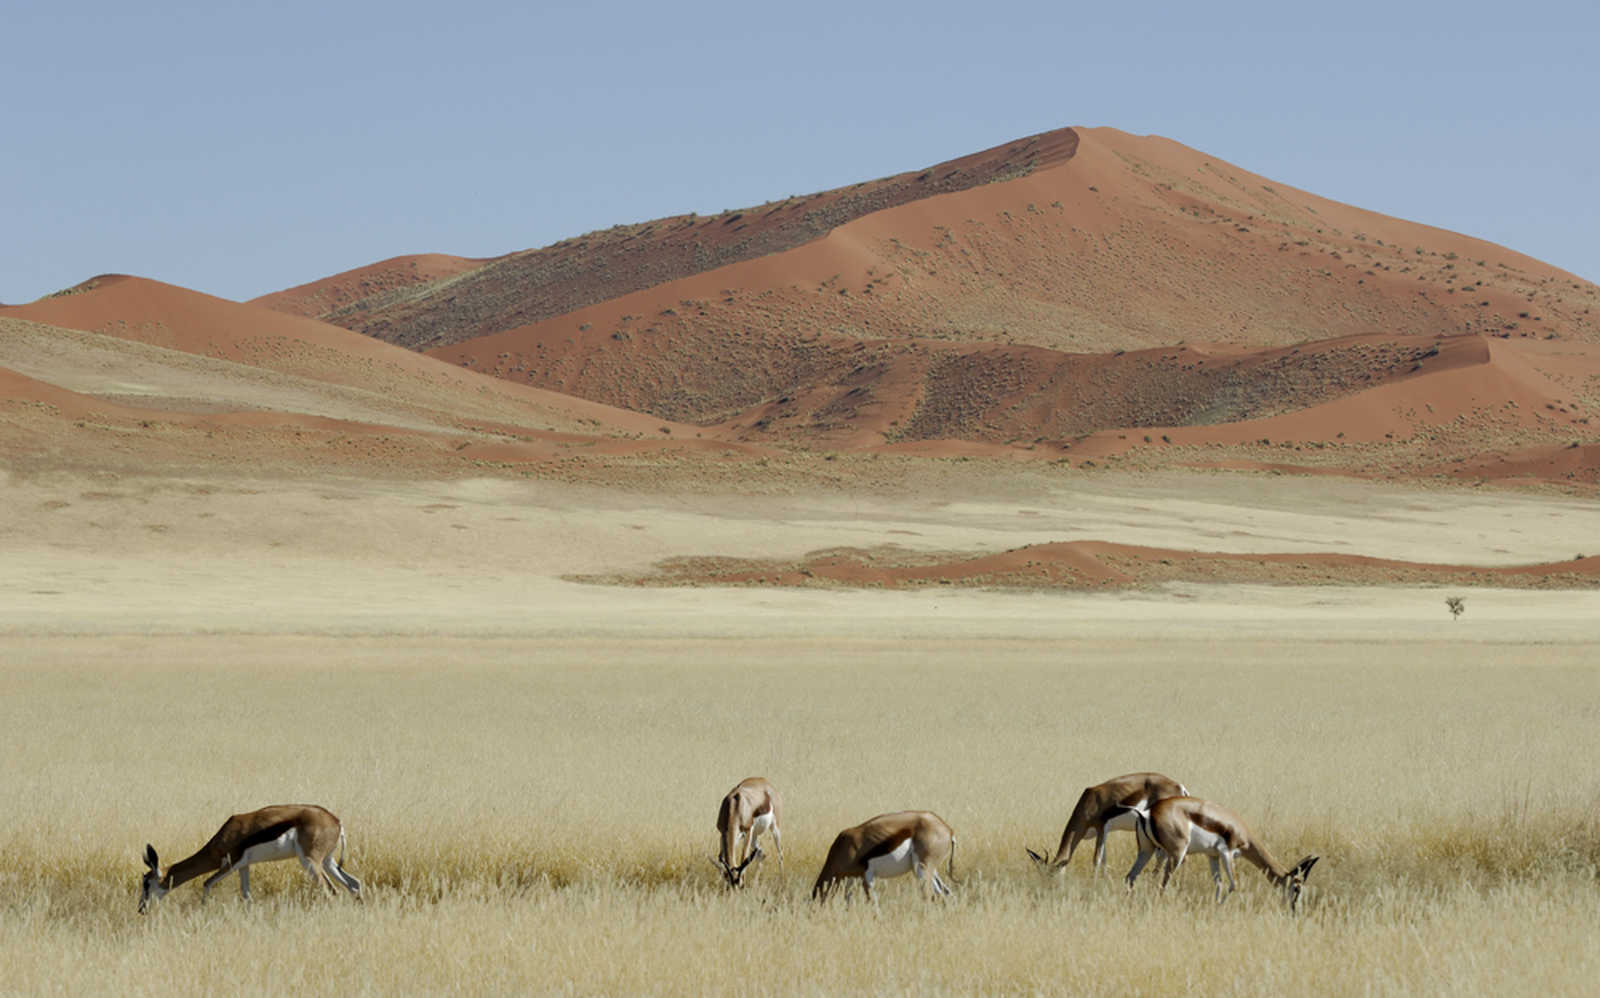 Image Désert du Namib, faune sauvage et peuple Himba